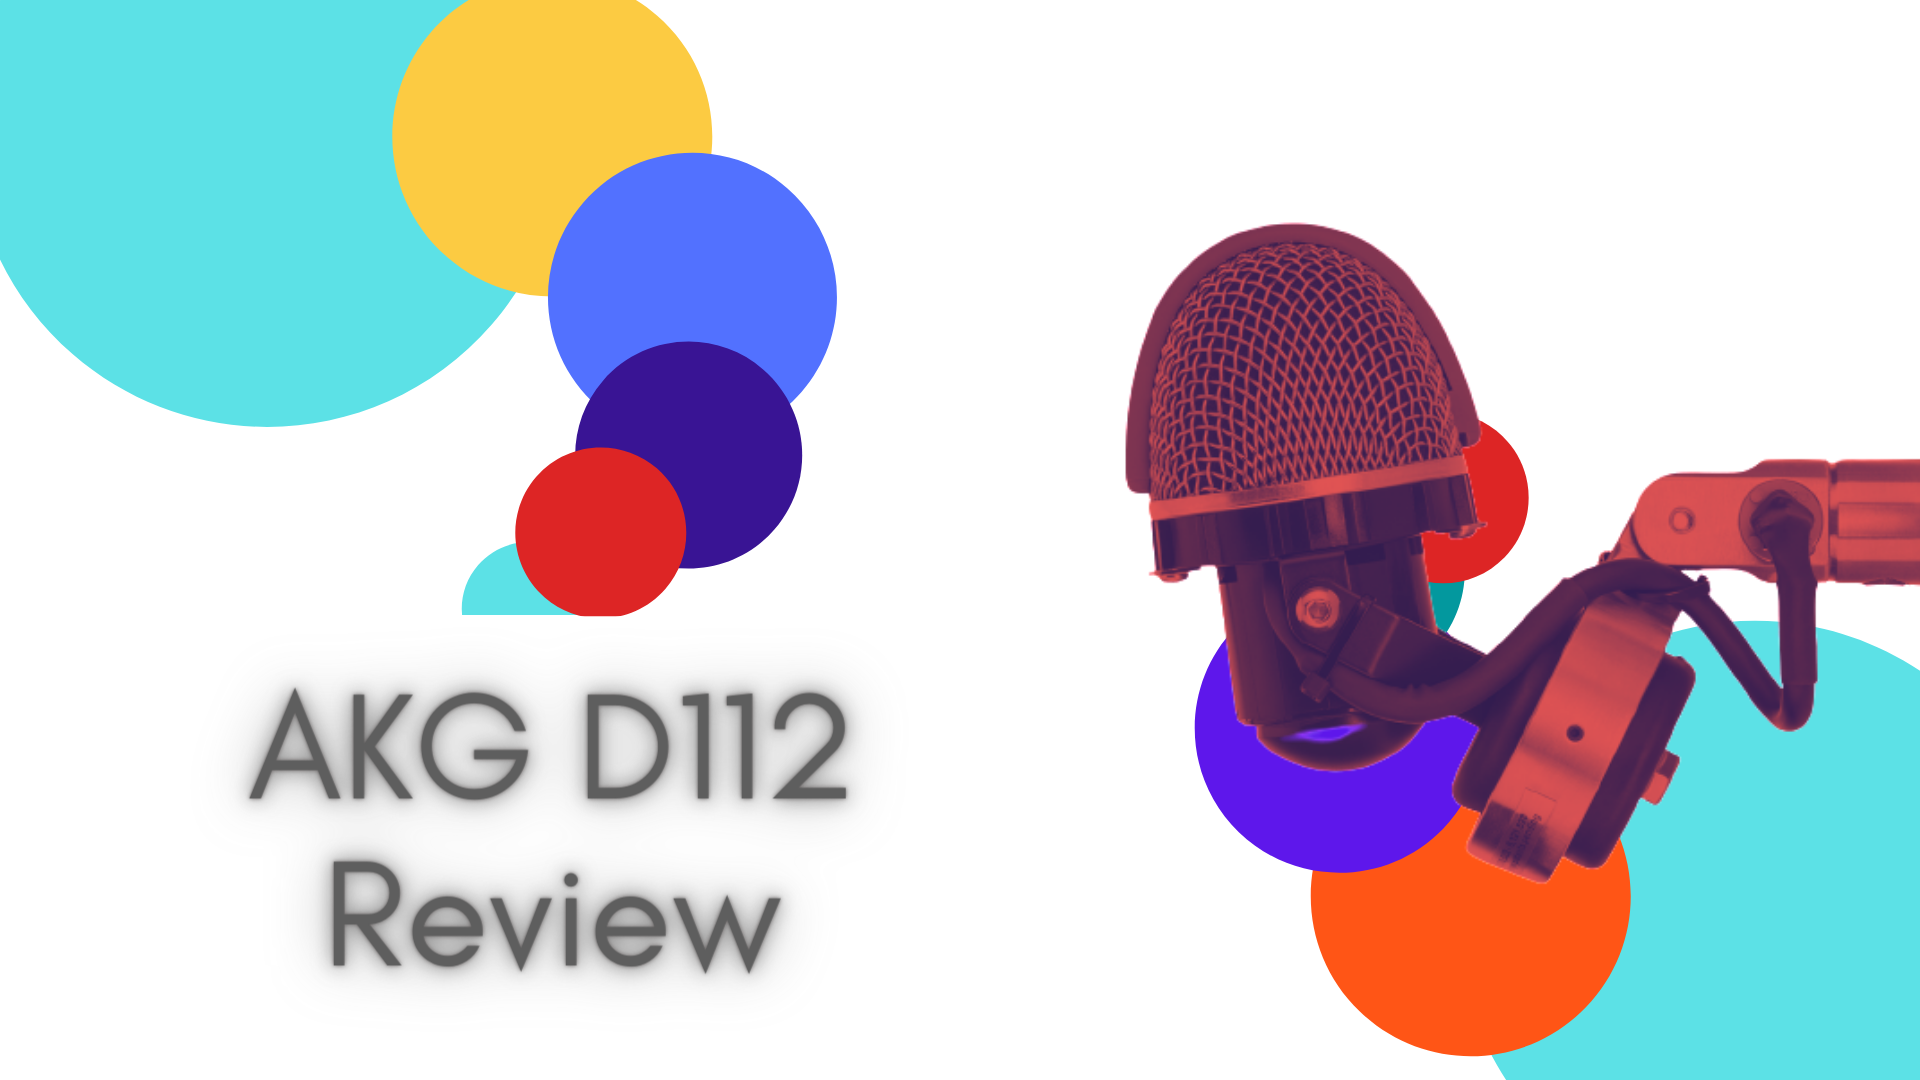 AKG D112 Review